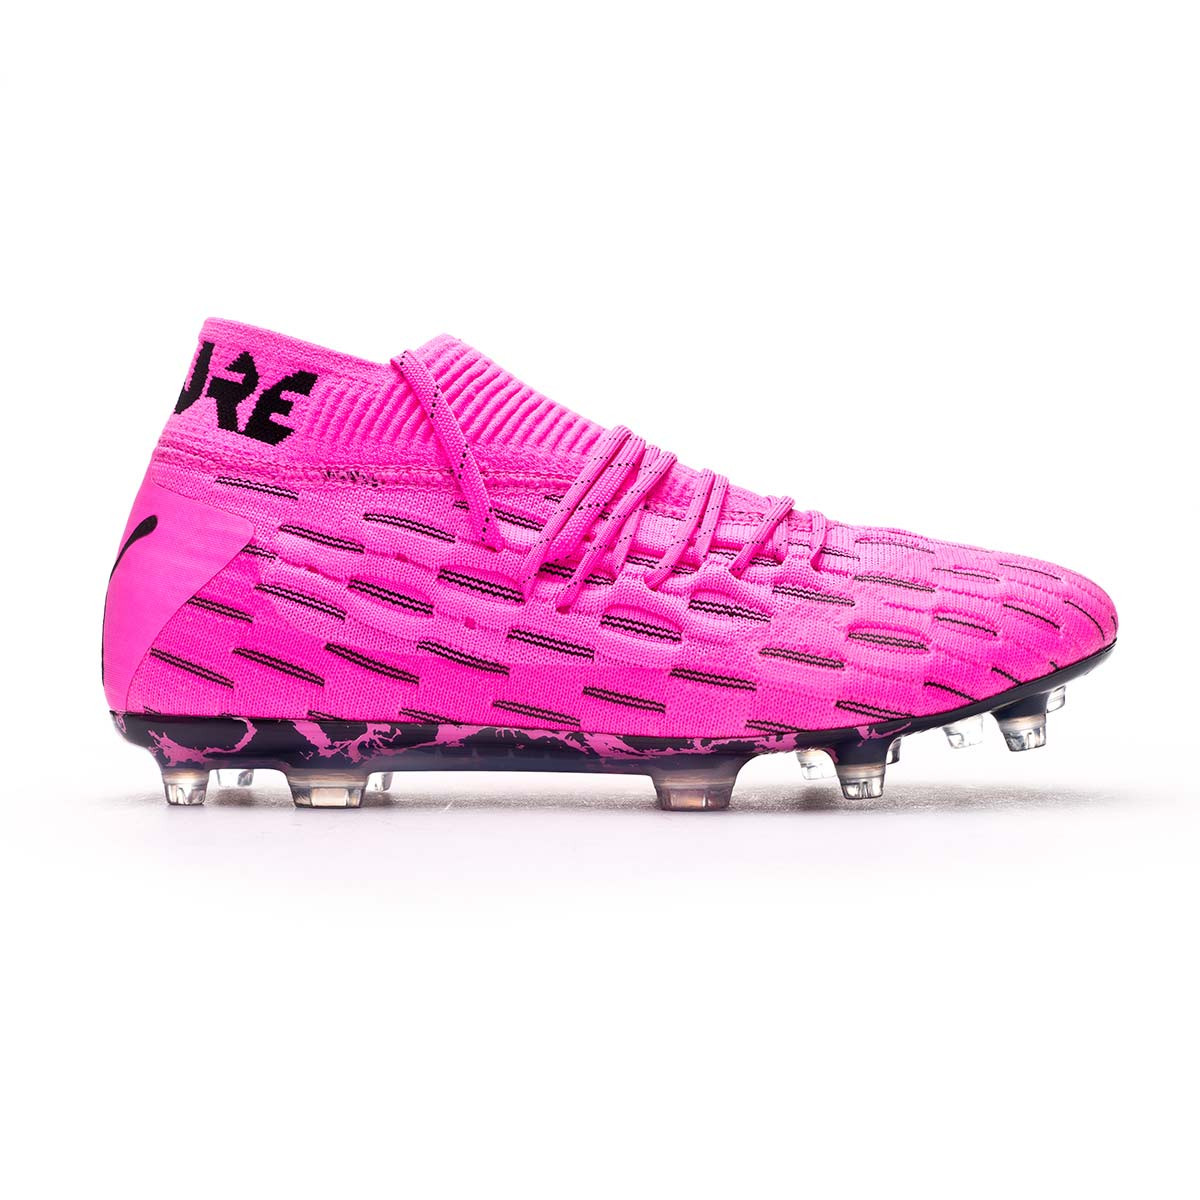 Football Boots Puma Future 6 1 Netfit Fg Ag Luminous Pink Puma Black Futbol Emotion